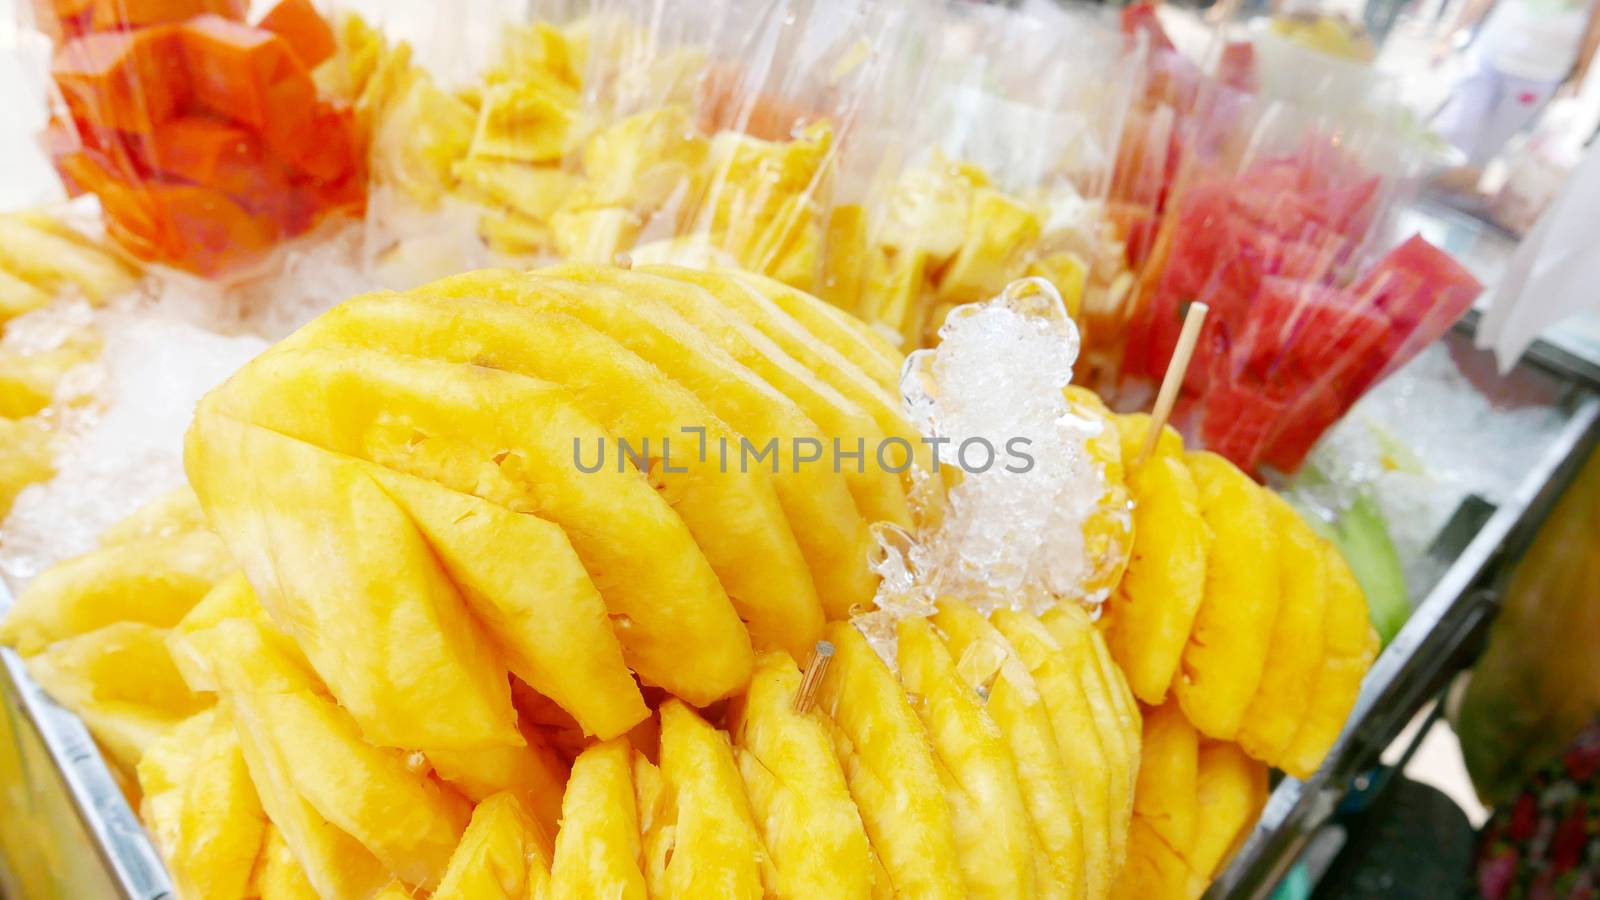 Thailand fruit market closeup by cougarsan